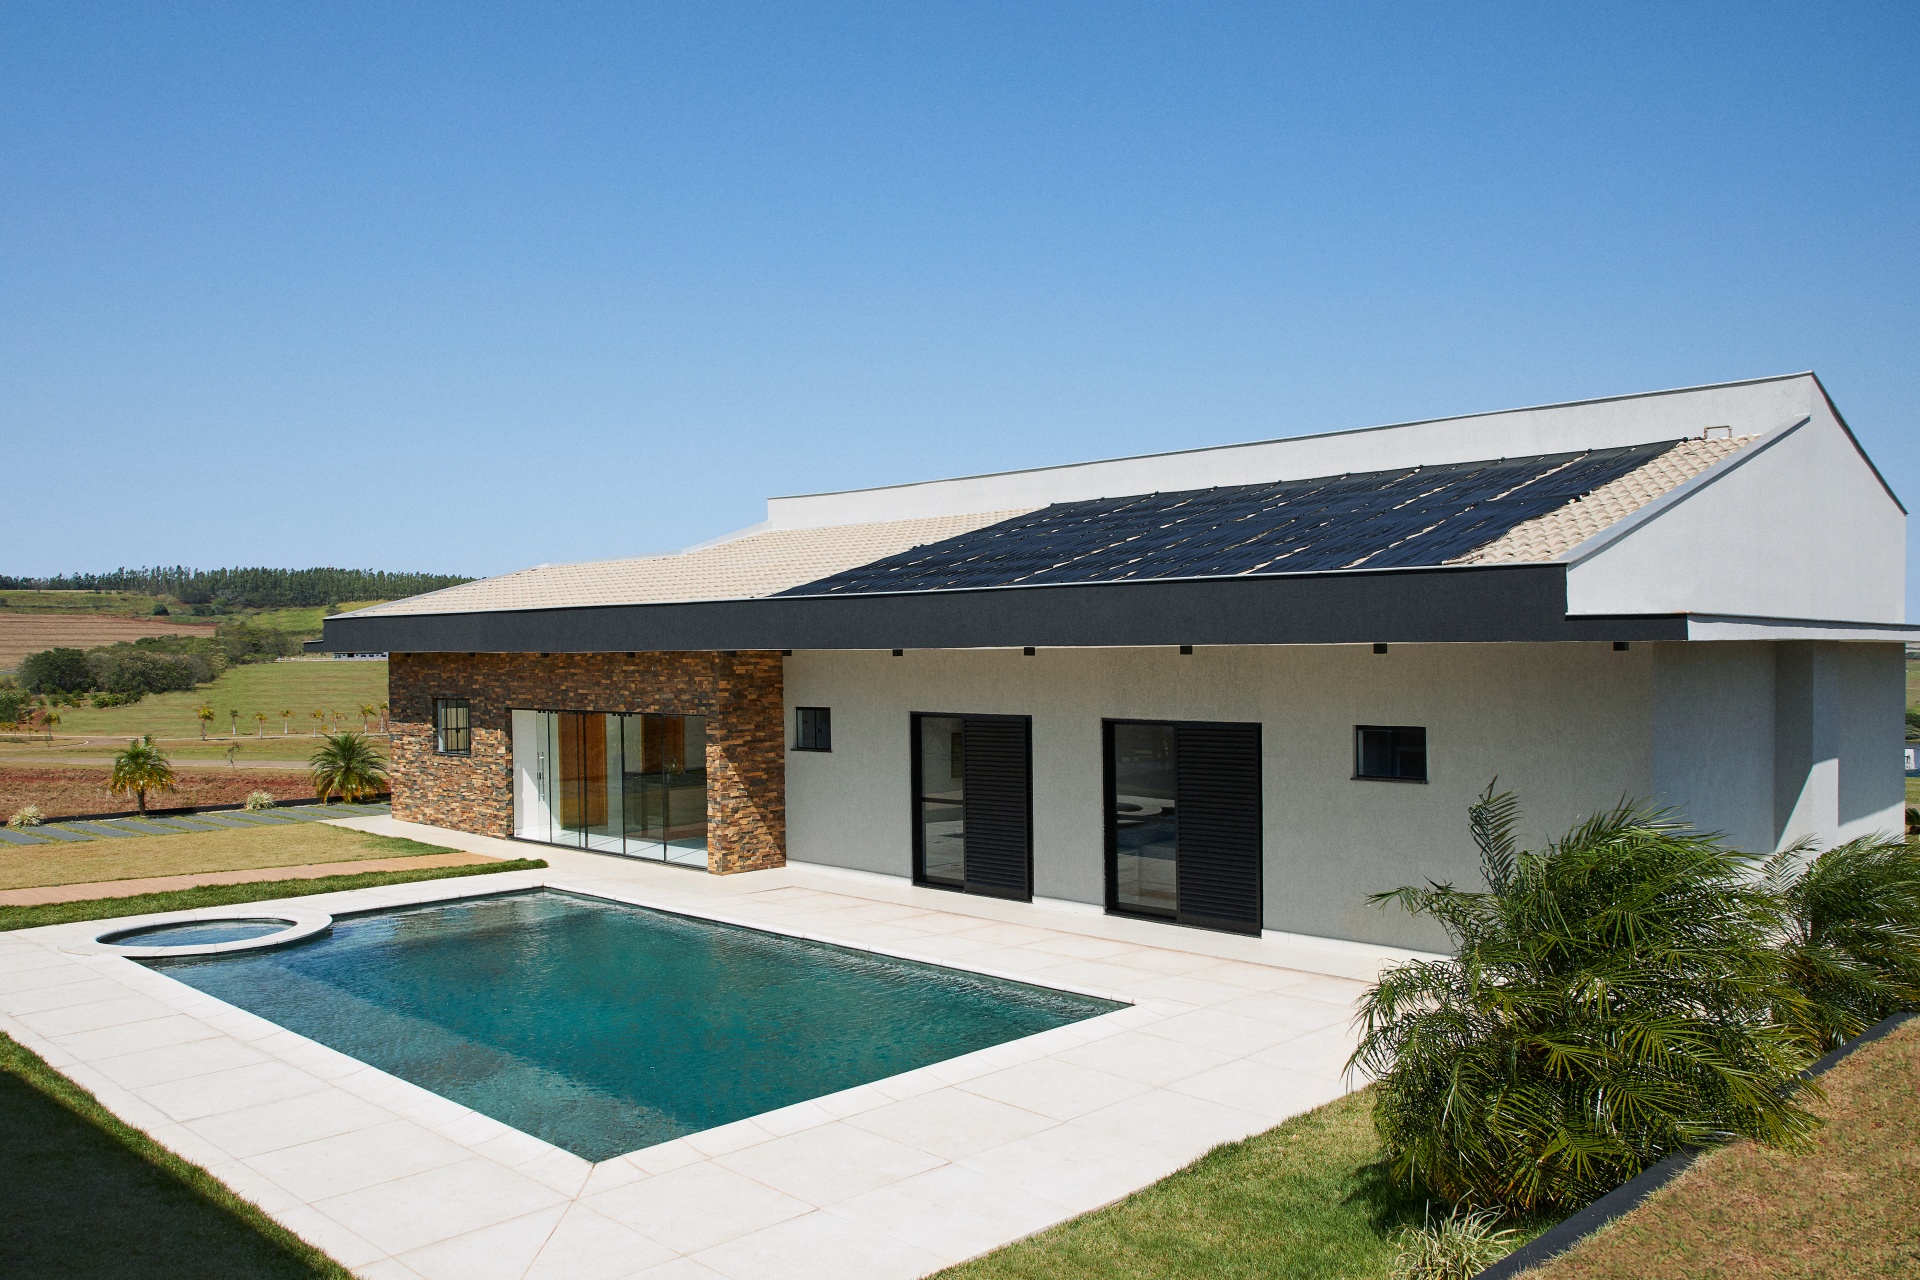 5 Motivos para adquirir os aquecedores solares para piscinas VIBEA!